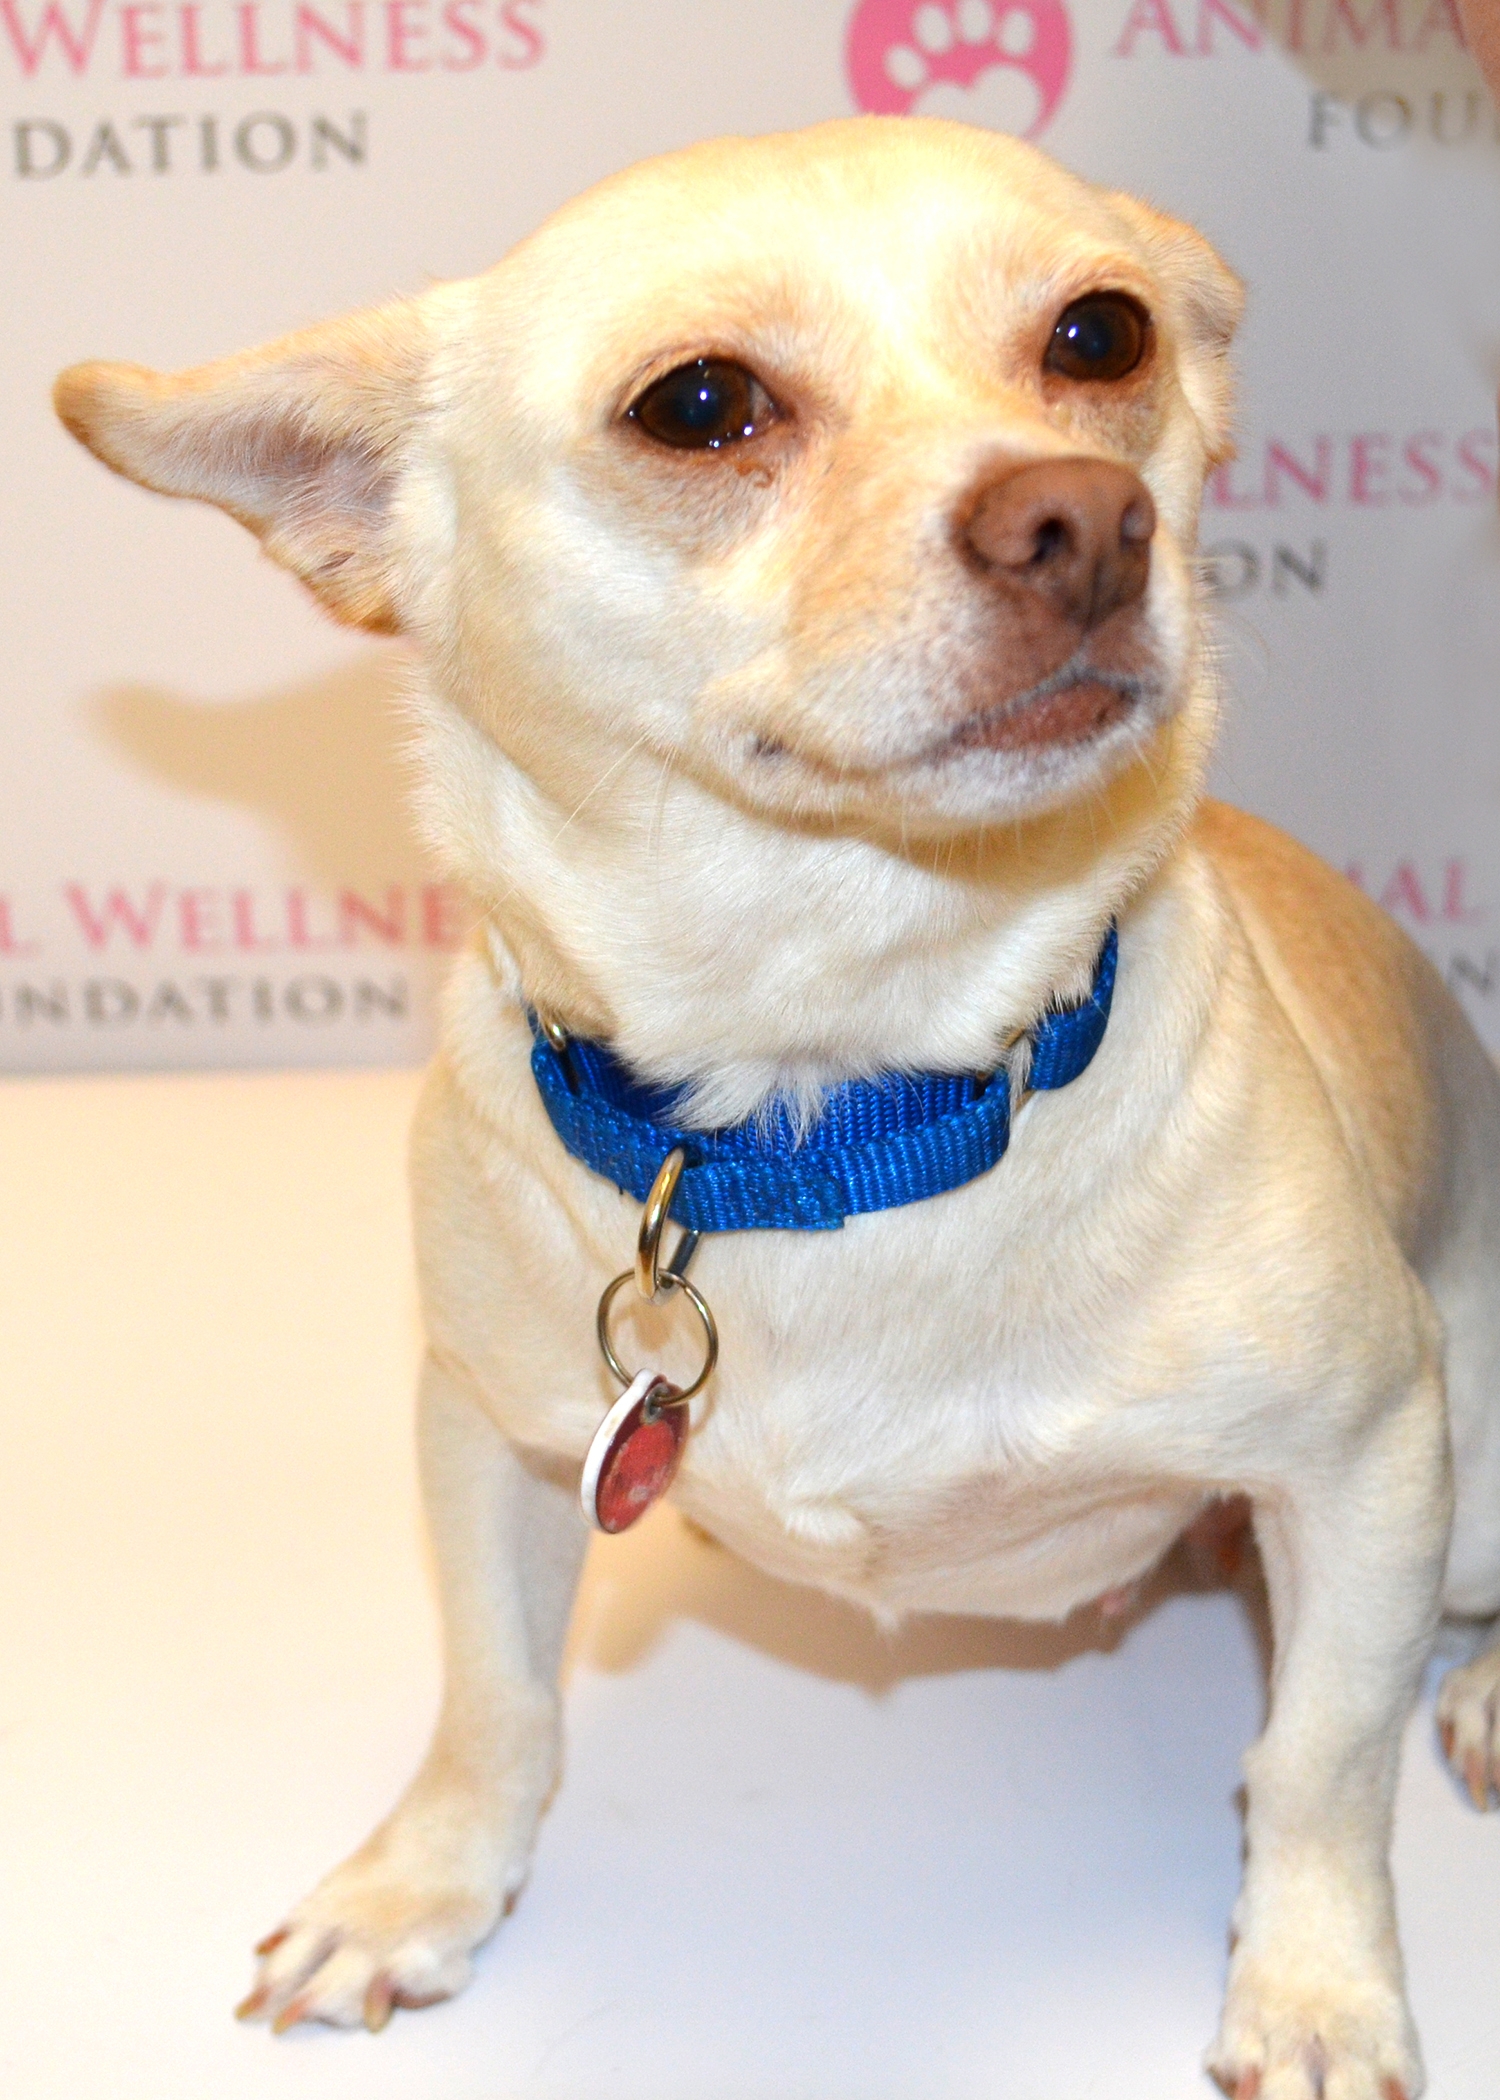 Mia, an Adoptable Dog from the Animal Wellness Foundation